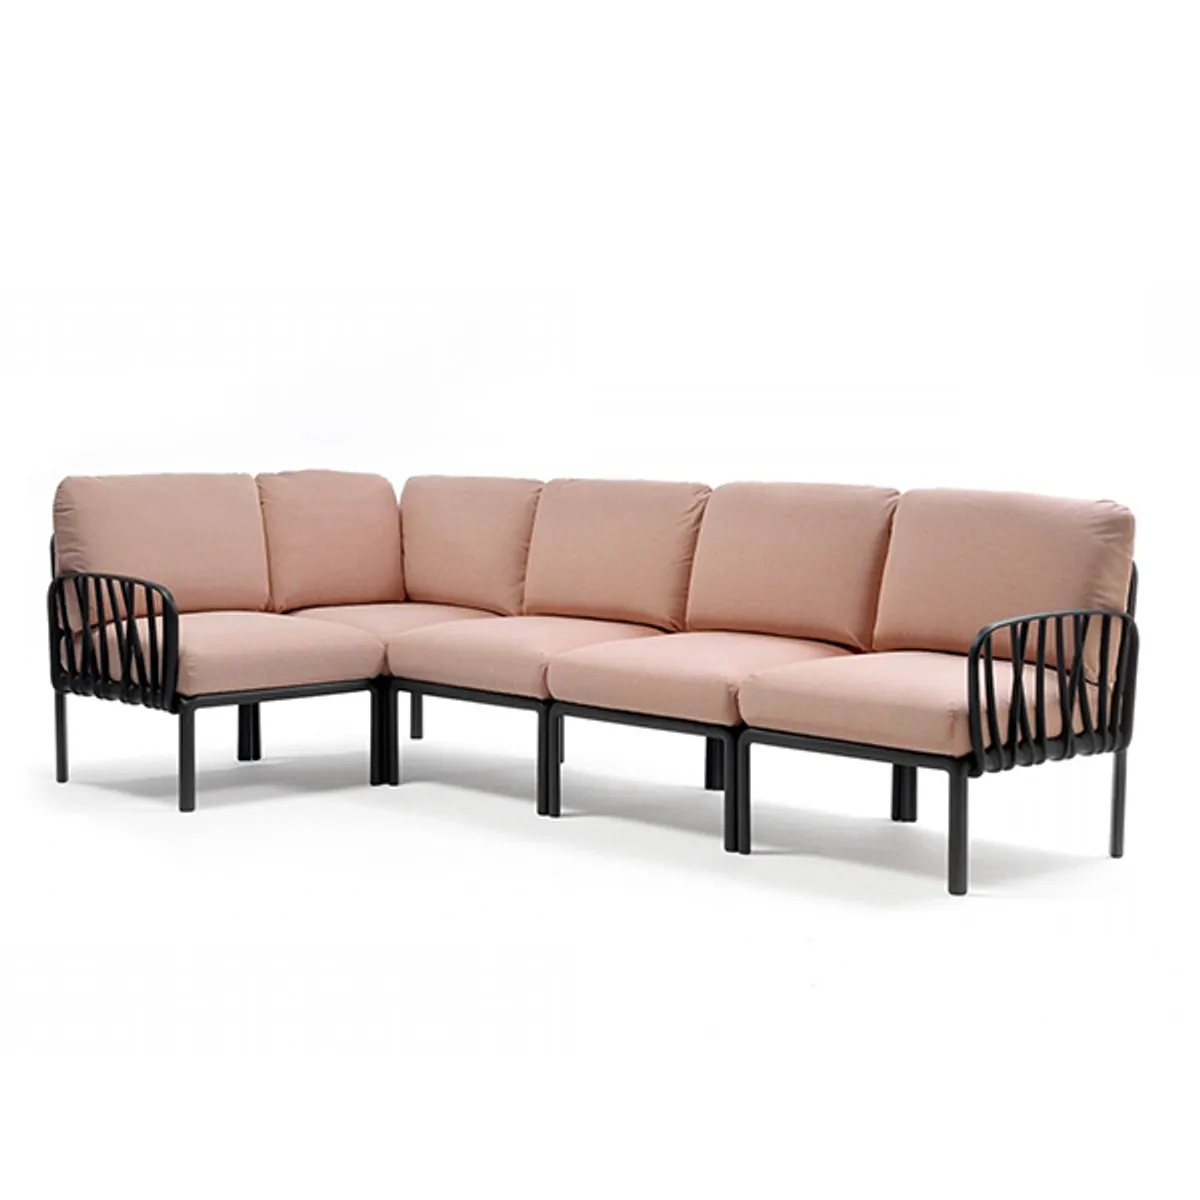 Komodo Modular Sofa For Exterior Use By Insideoutcontracts